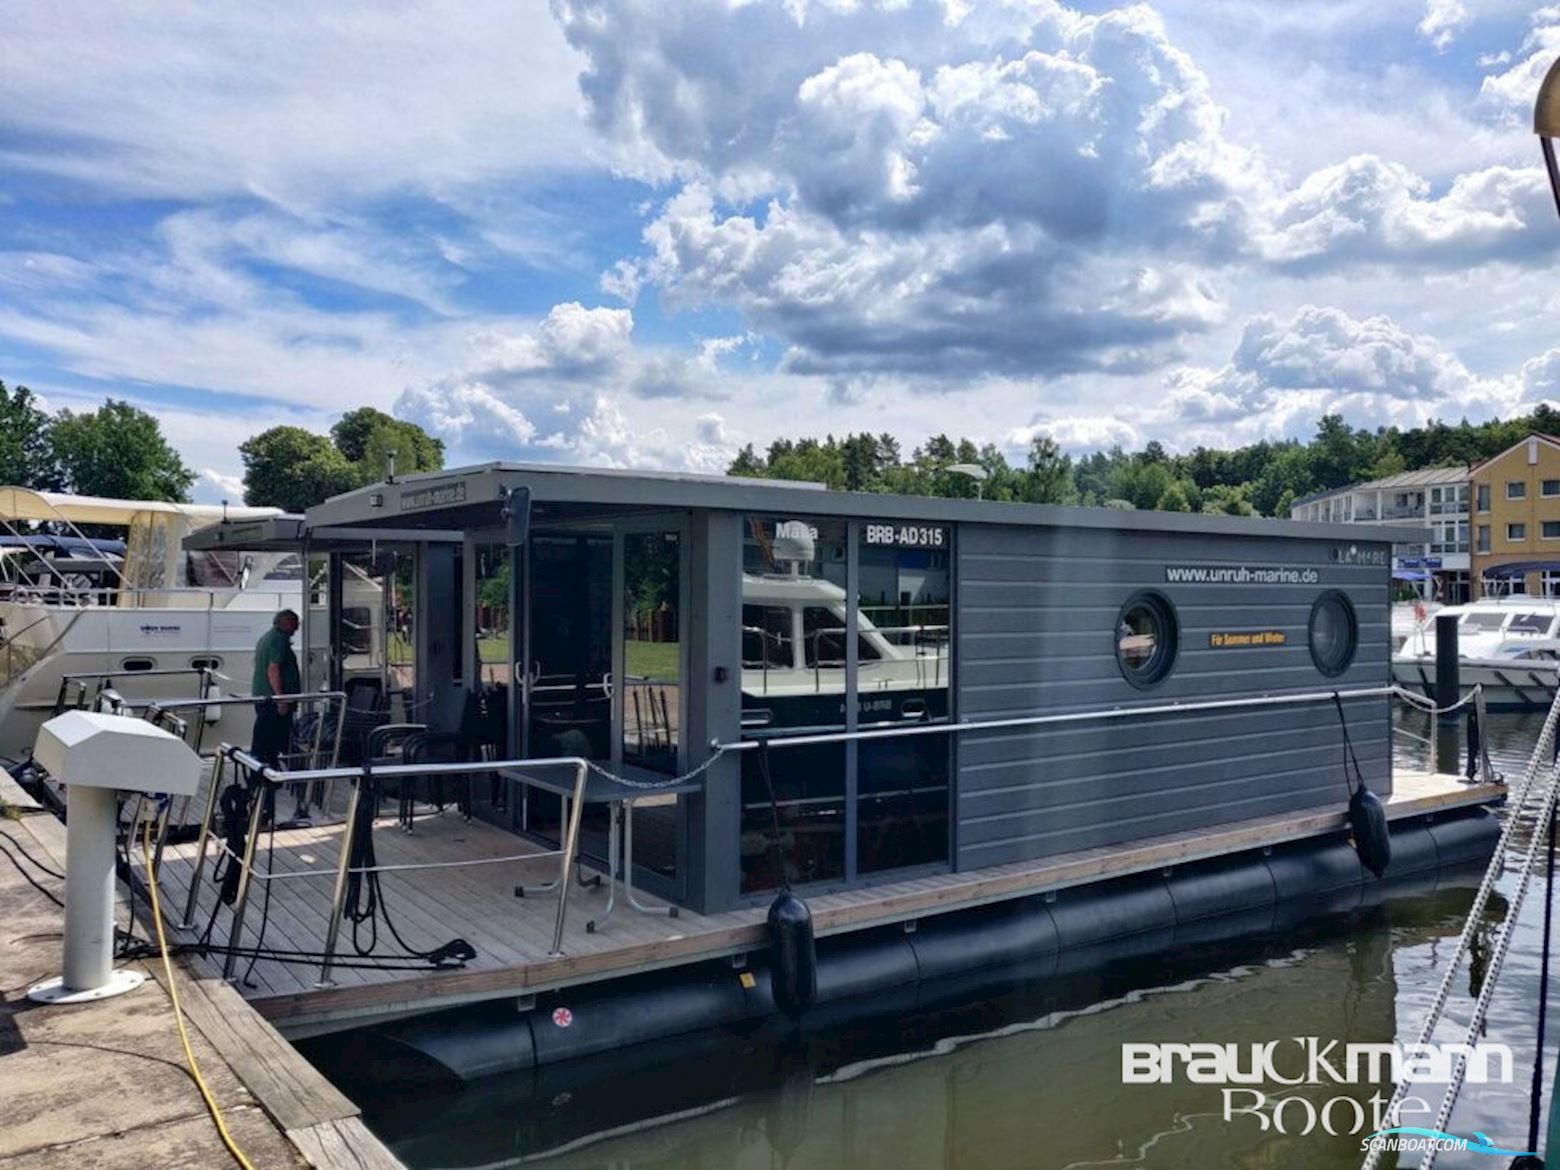 La Mare Apart L Live a board / River boat 2019, with Honda engine, Germany